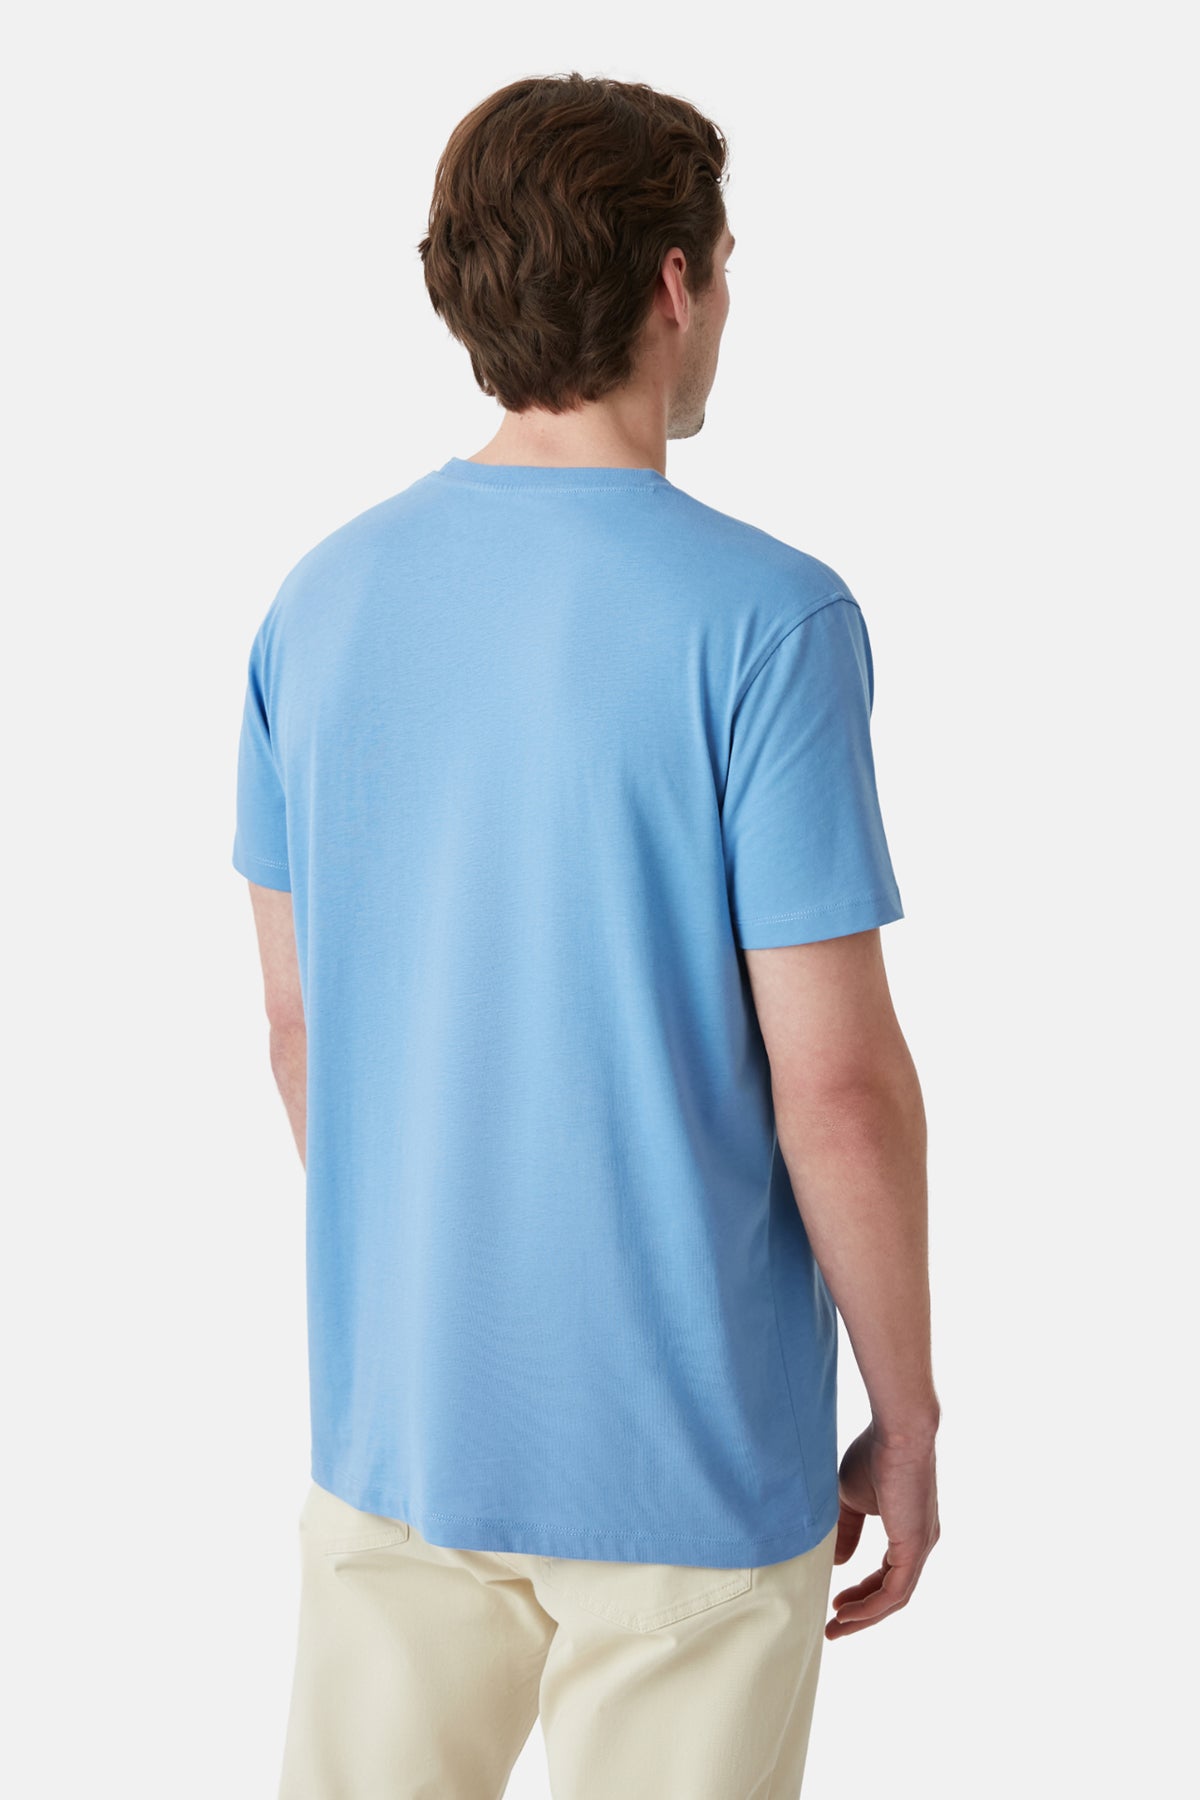 Kızıl Tilki Light-Weight T-shirt - Mavi